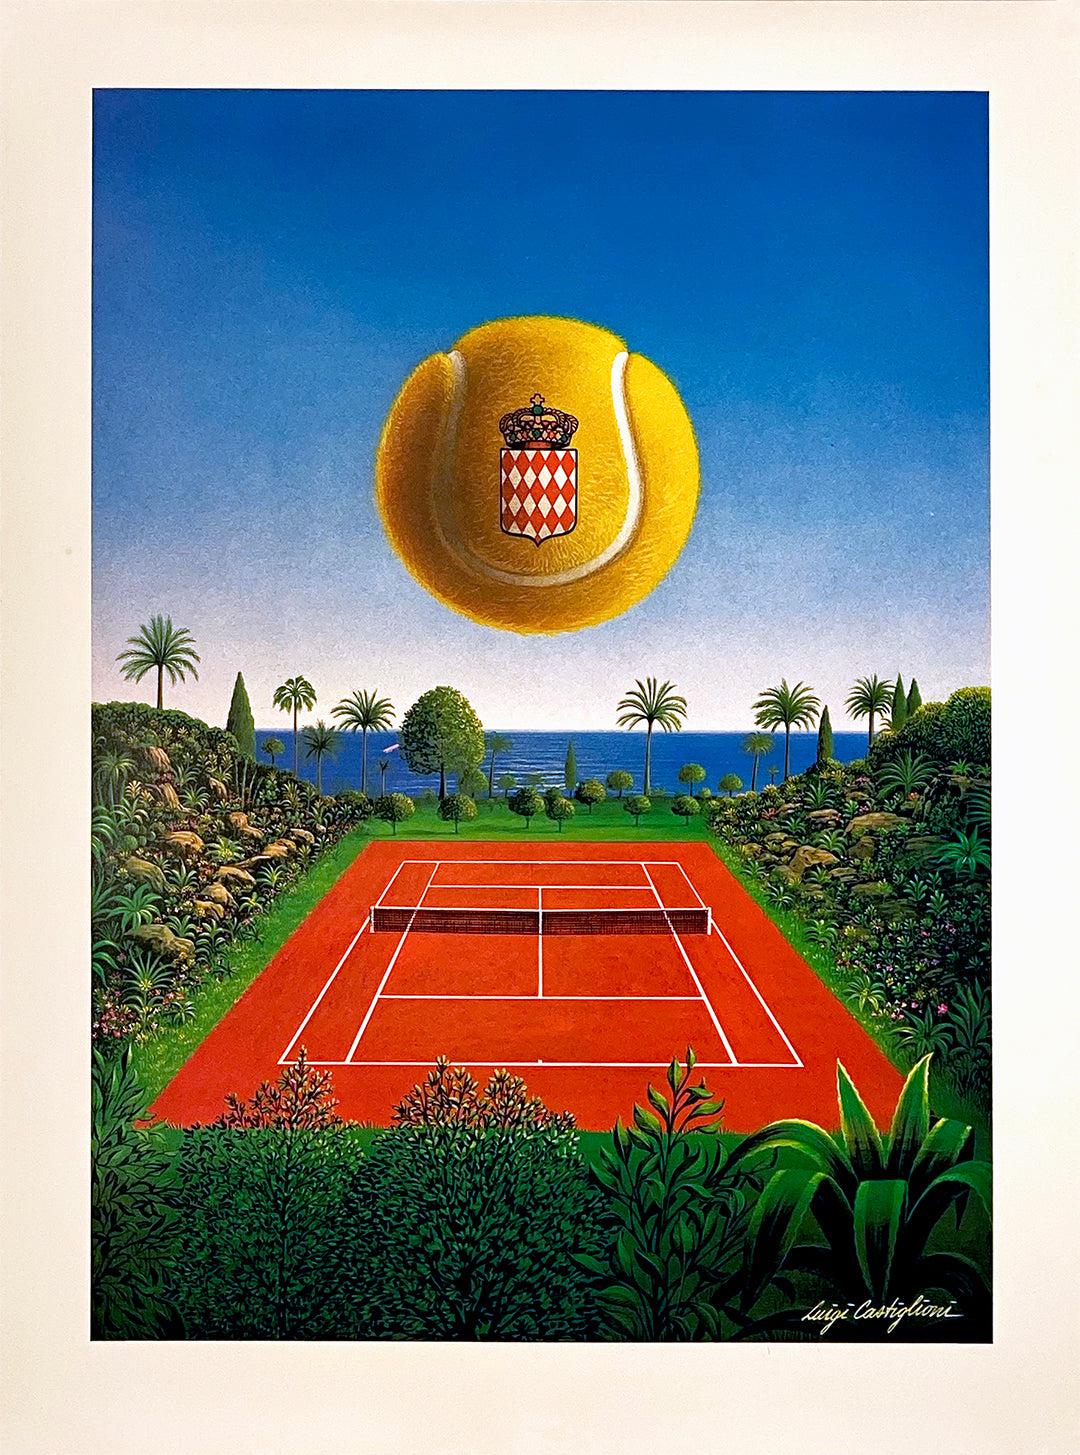 Tennis - Ball Over Court Original Vintage Print by Luigi Castiglioni c1983